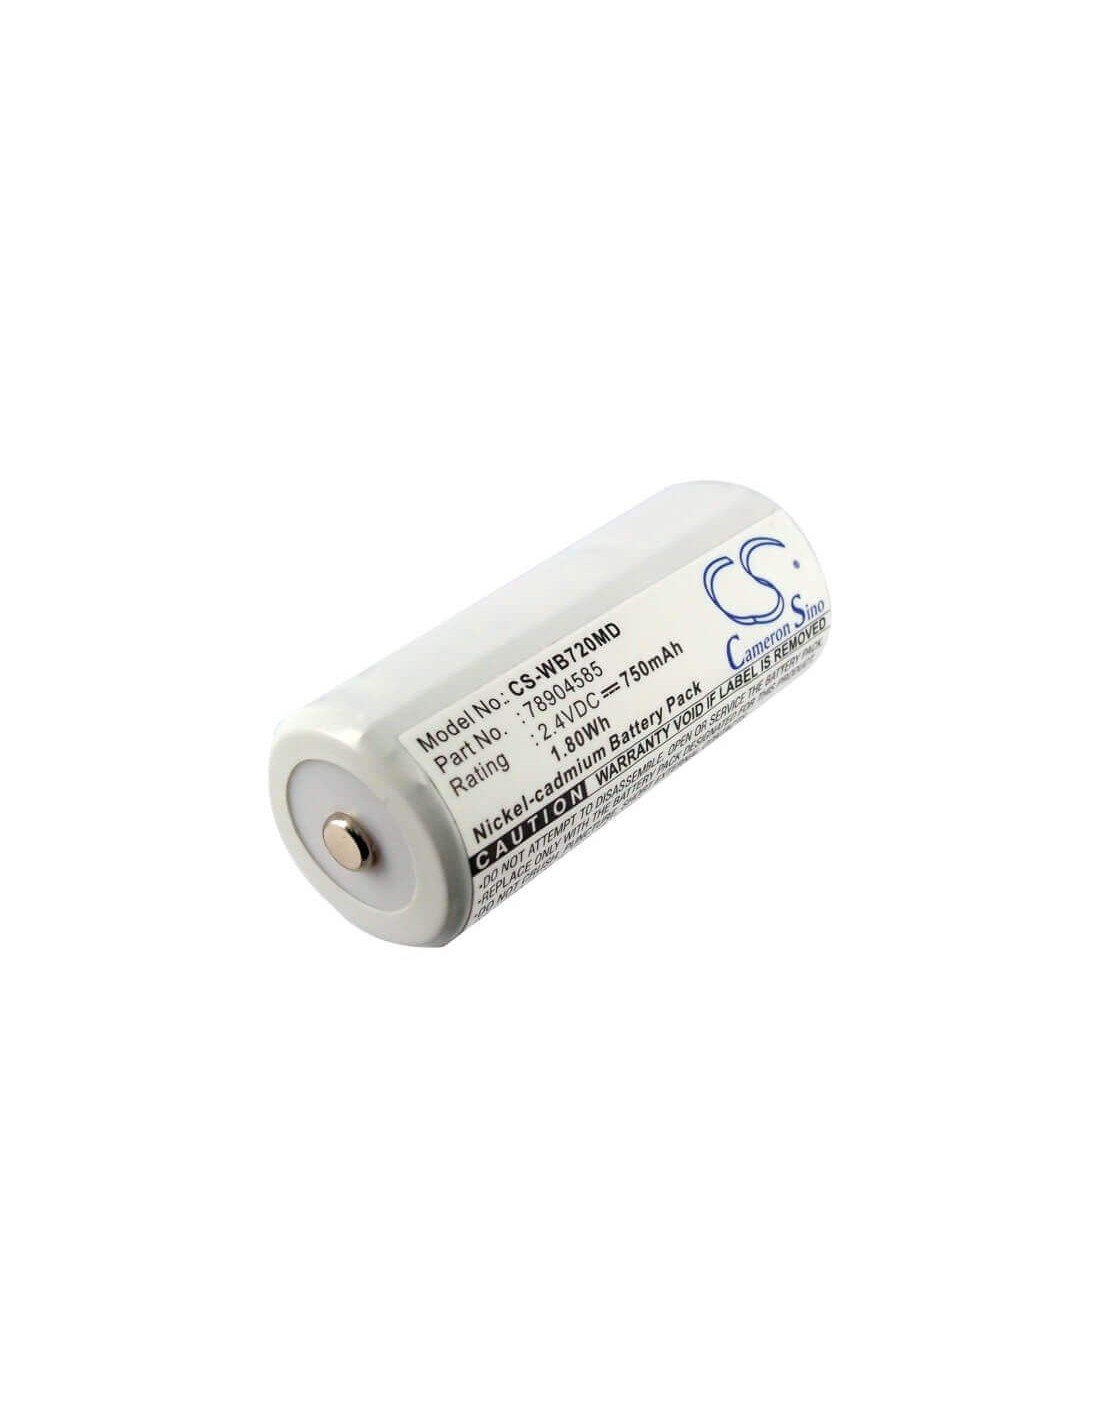 Battery for Welch Allyn, Cardinal Medical Cjb-720 2.4V, 750mAh - 1.80Wh